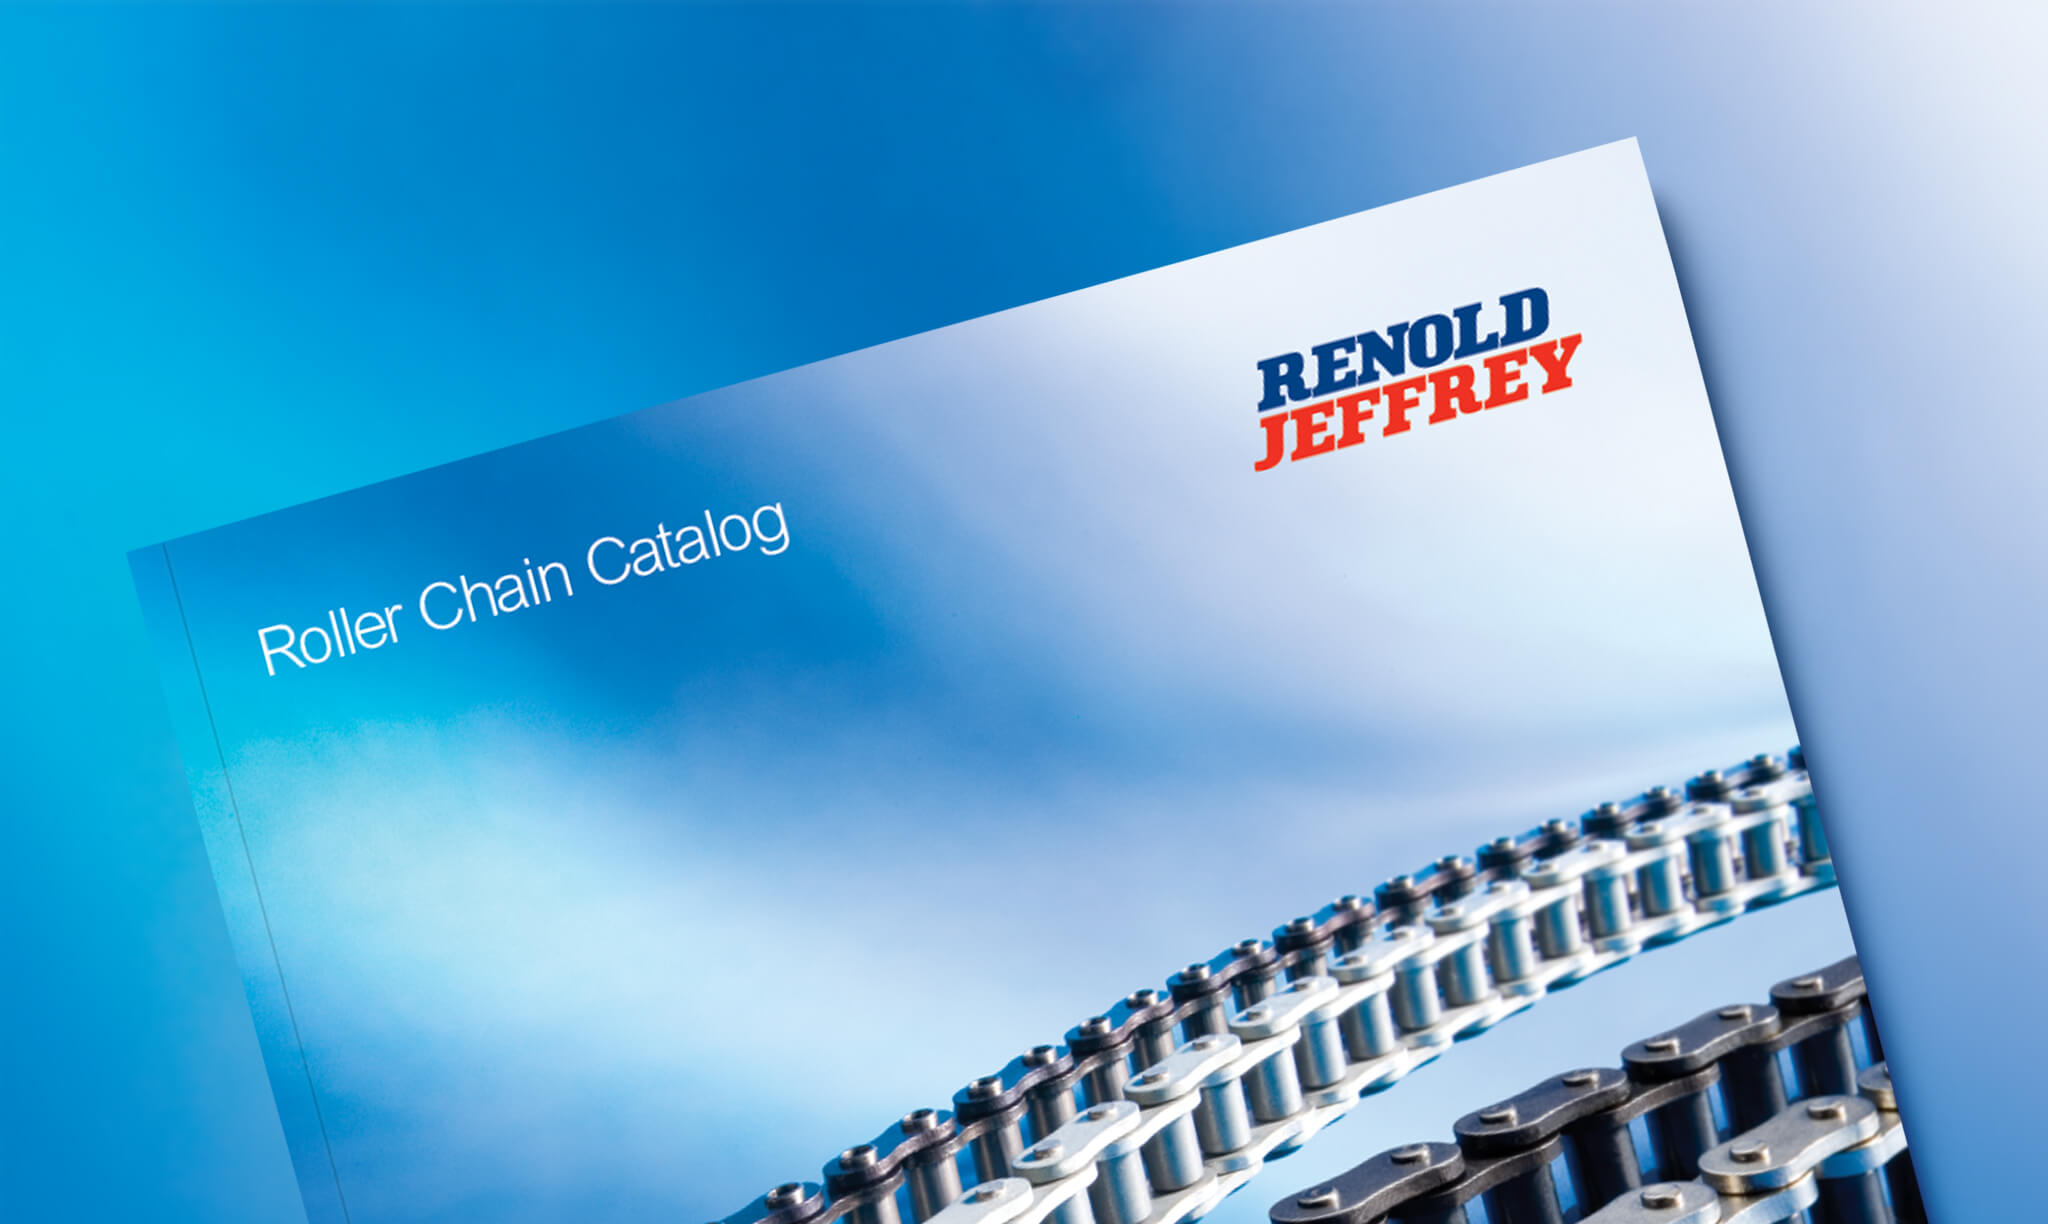 Renold Jeffrey Roller Chain Catalog